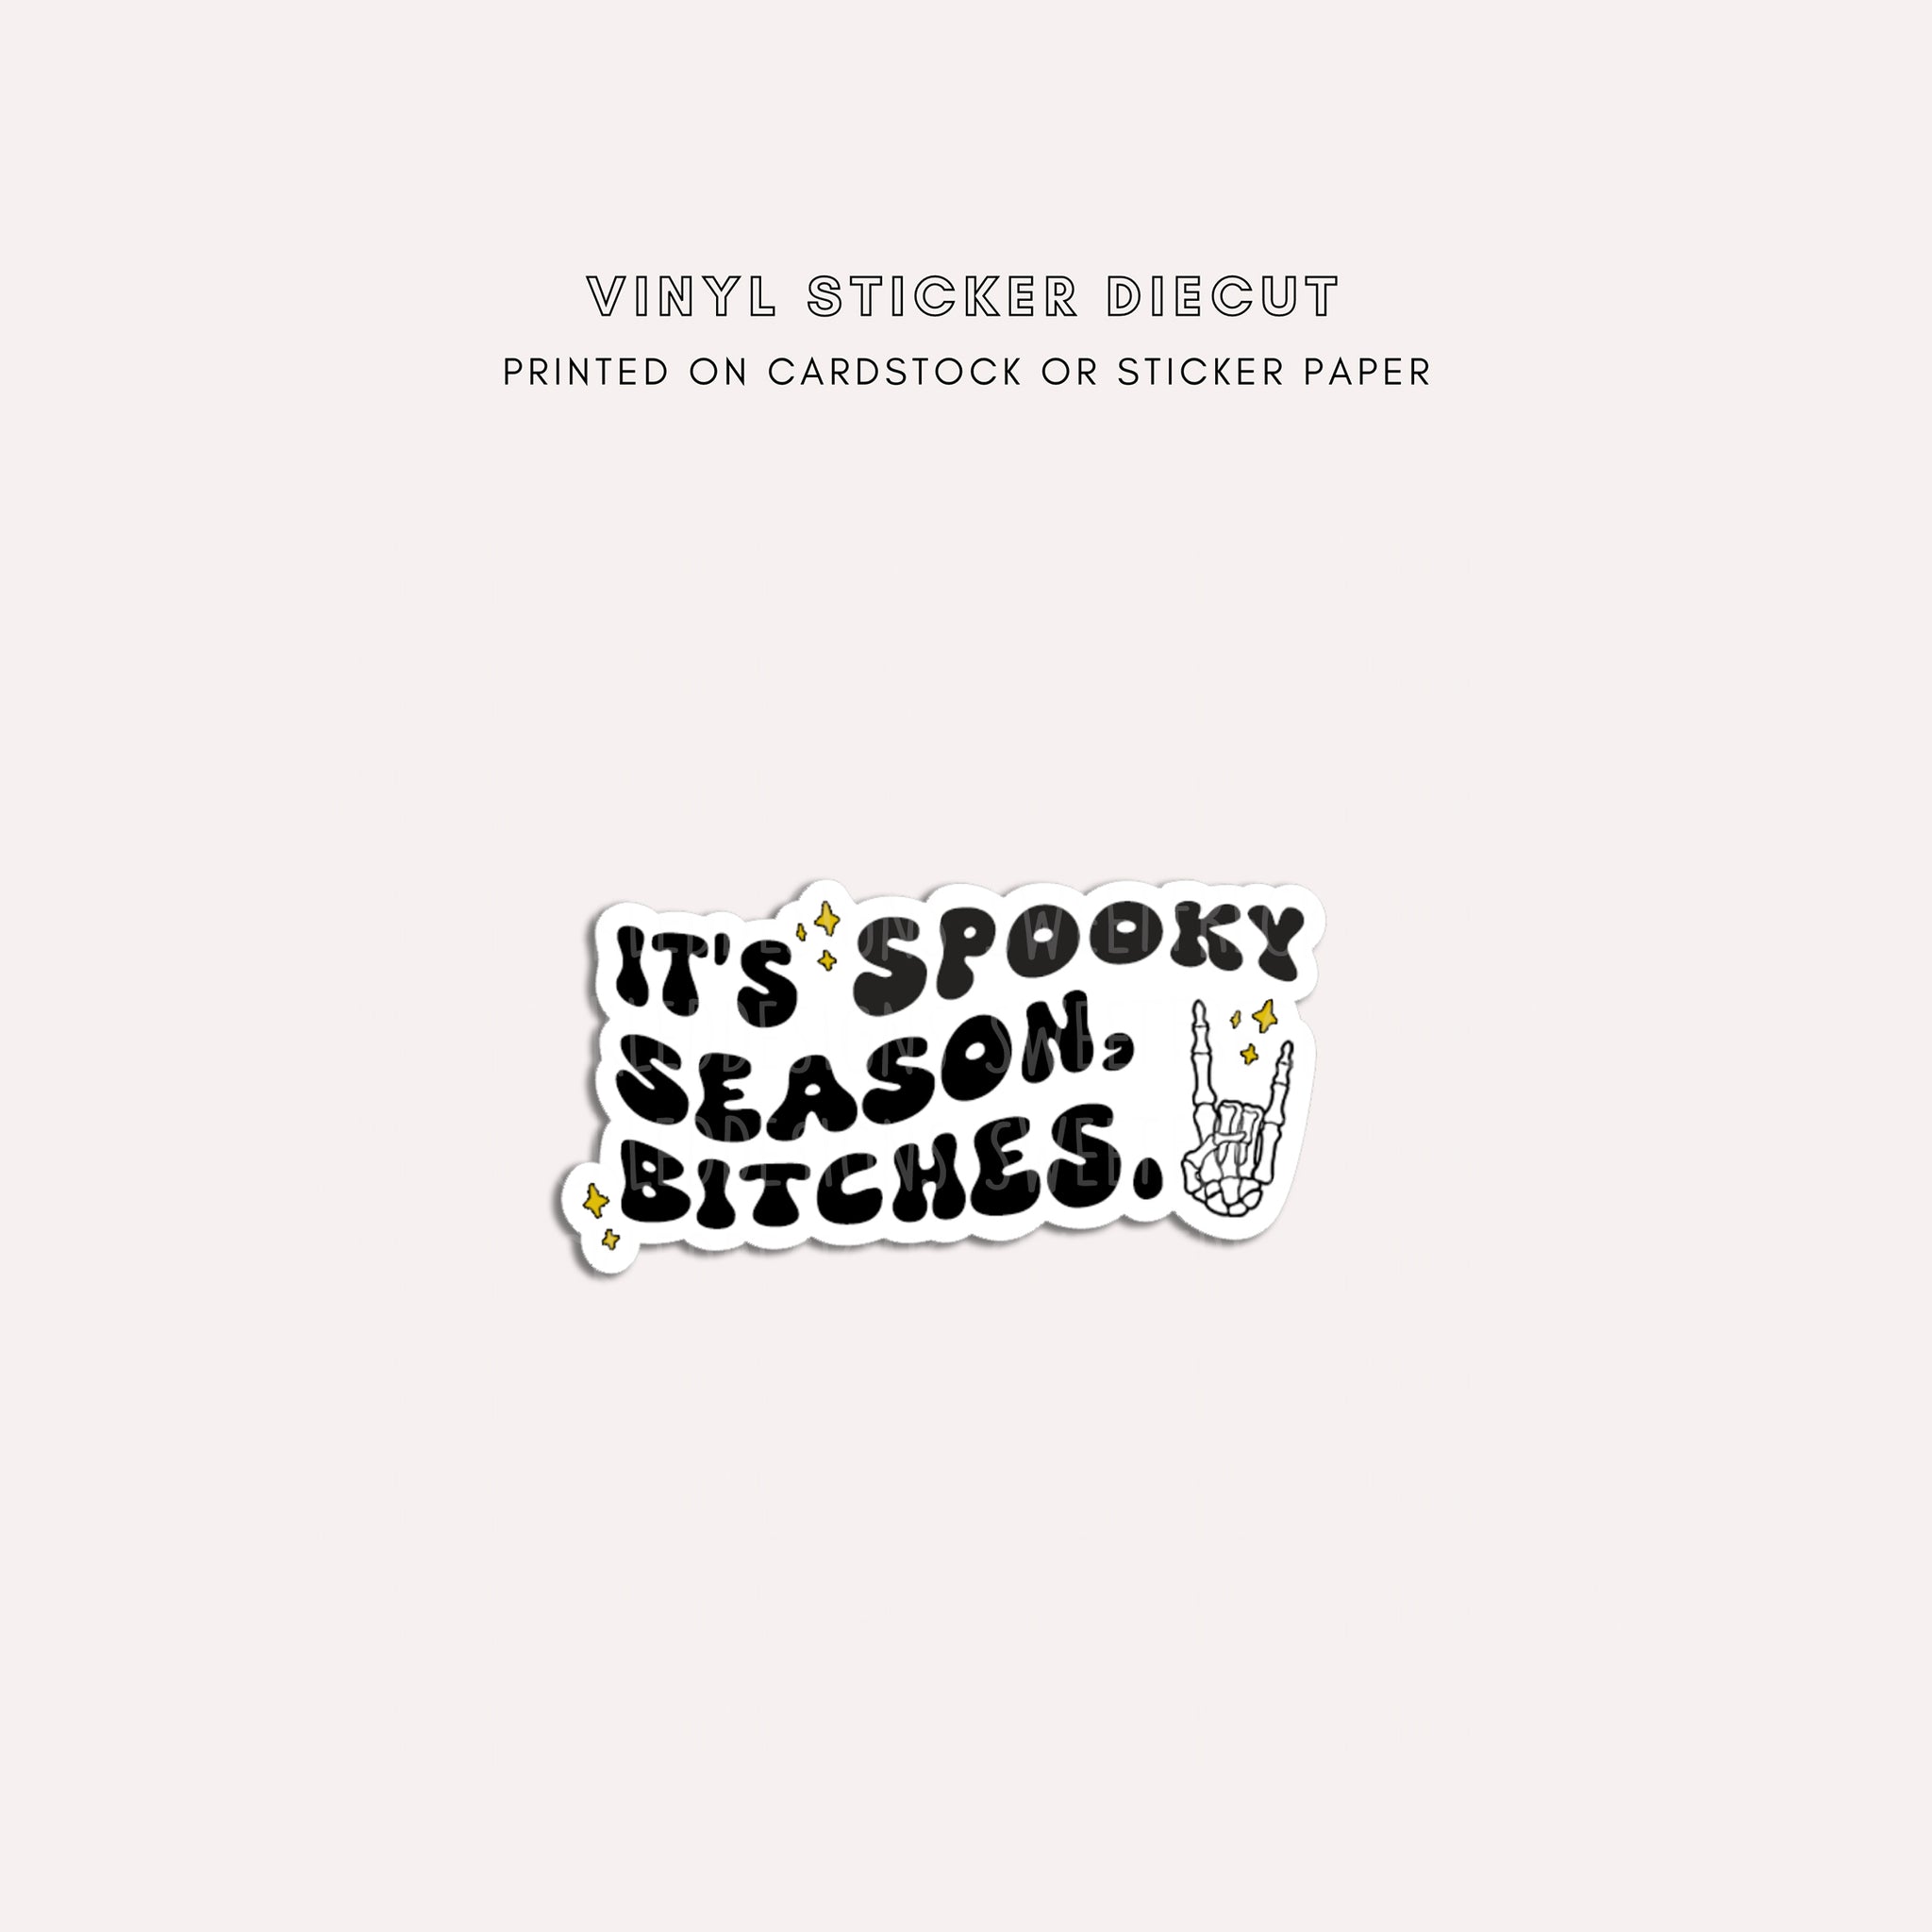 Vinyl Sticker Diecut - It's Spooky Season Bitches!